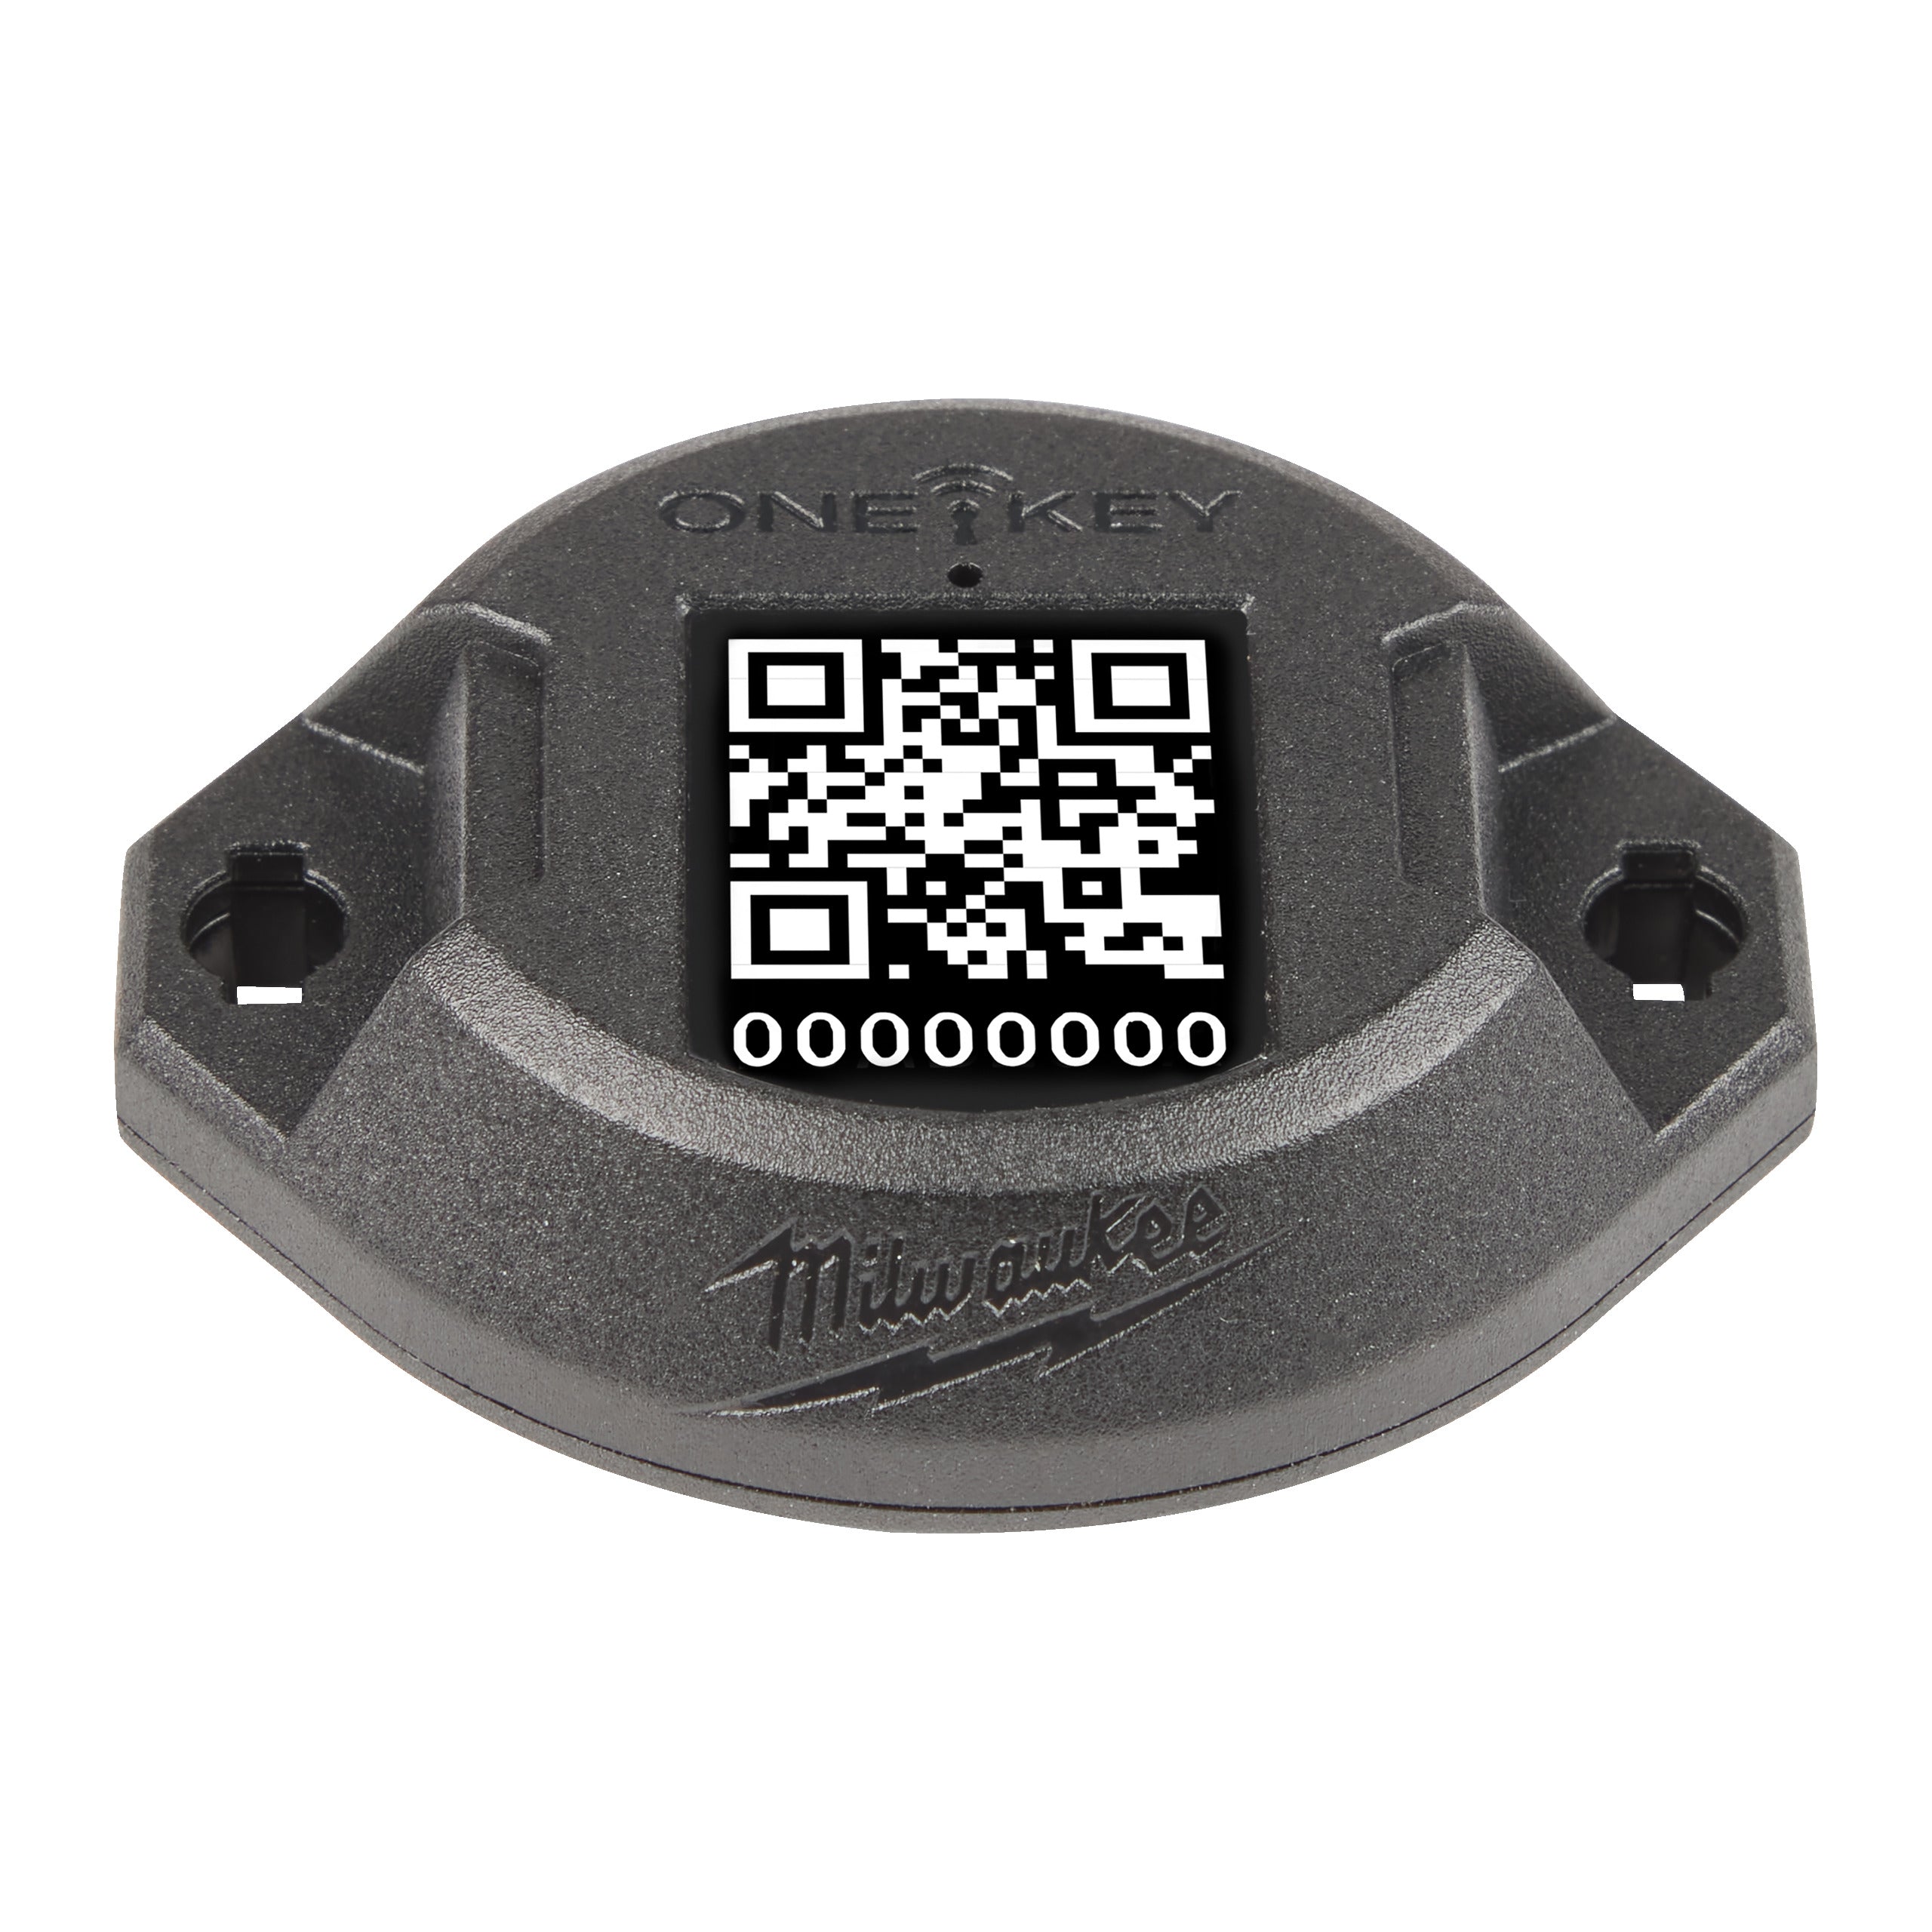 Modul de urmărire BTT ONE-KEY™ Bluetooth® Milwaukee BTT-10, cod 4933478643